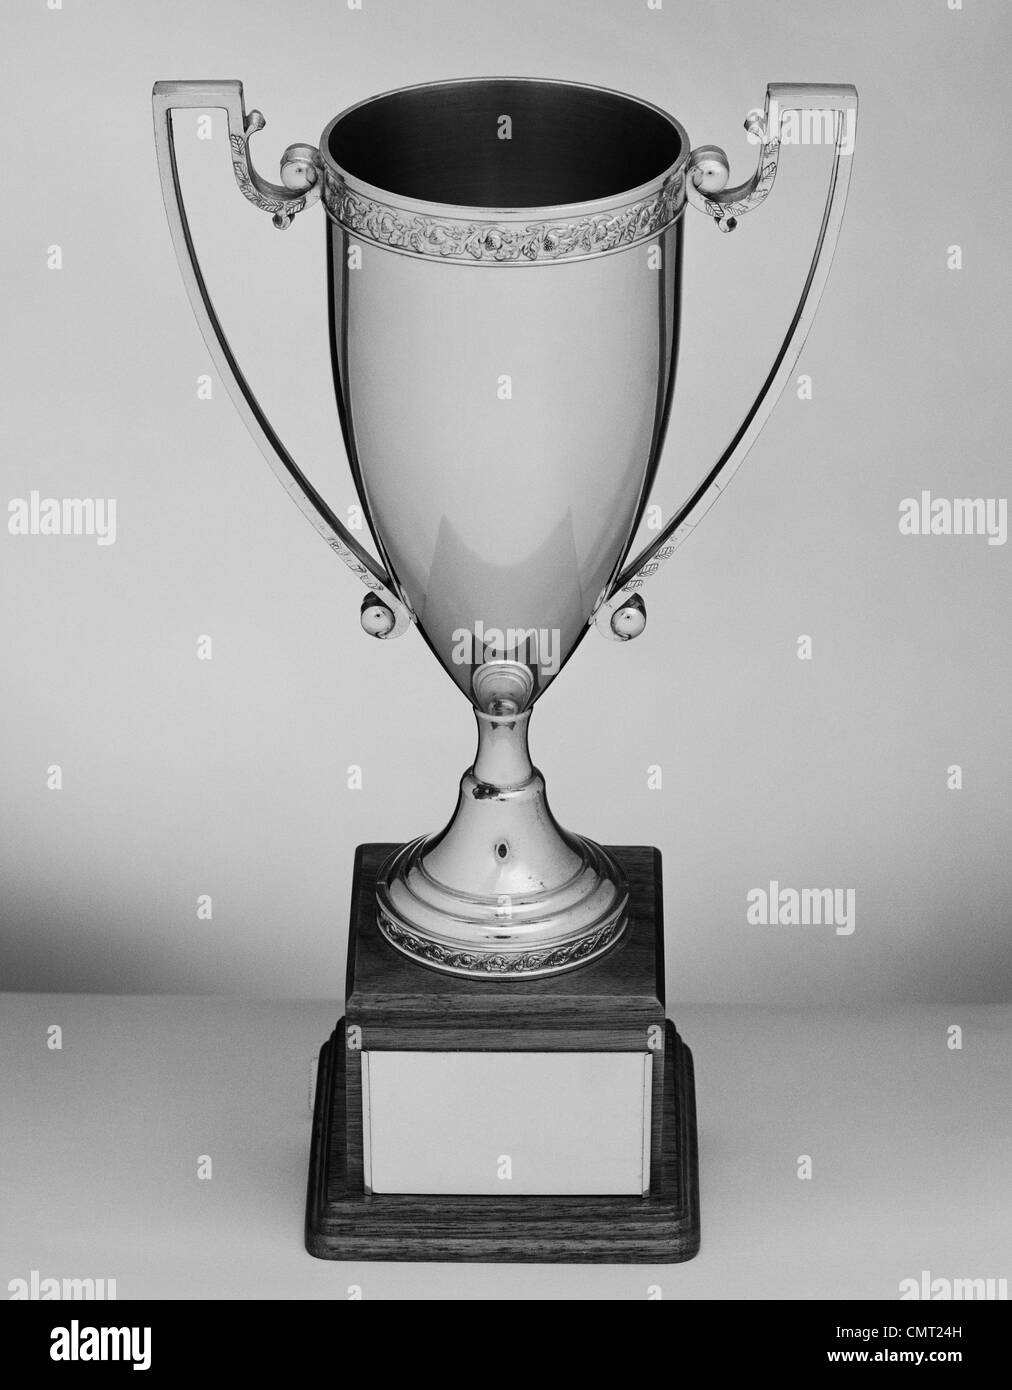 Deluxe Cheeseburger Trophy Cup